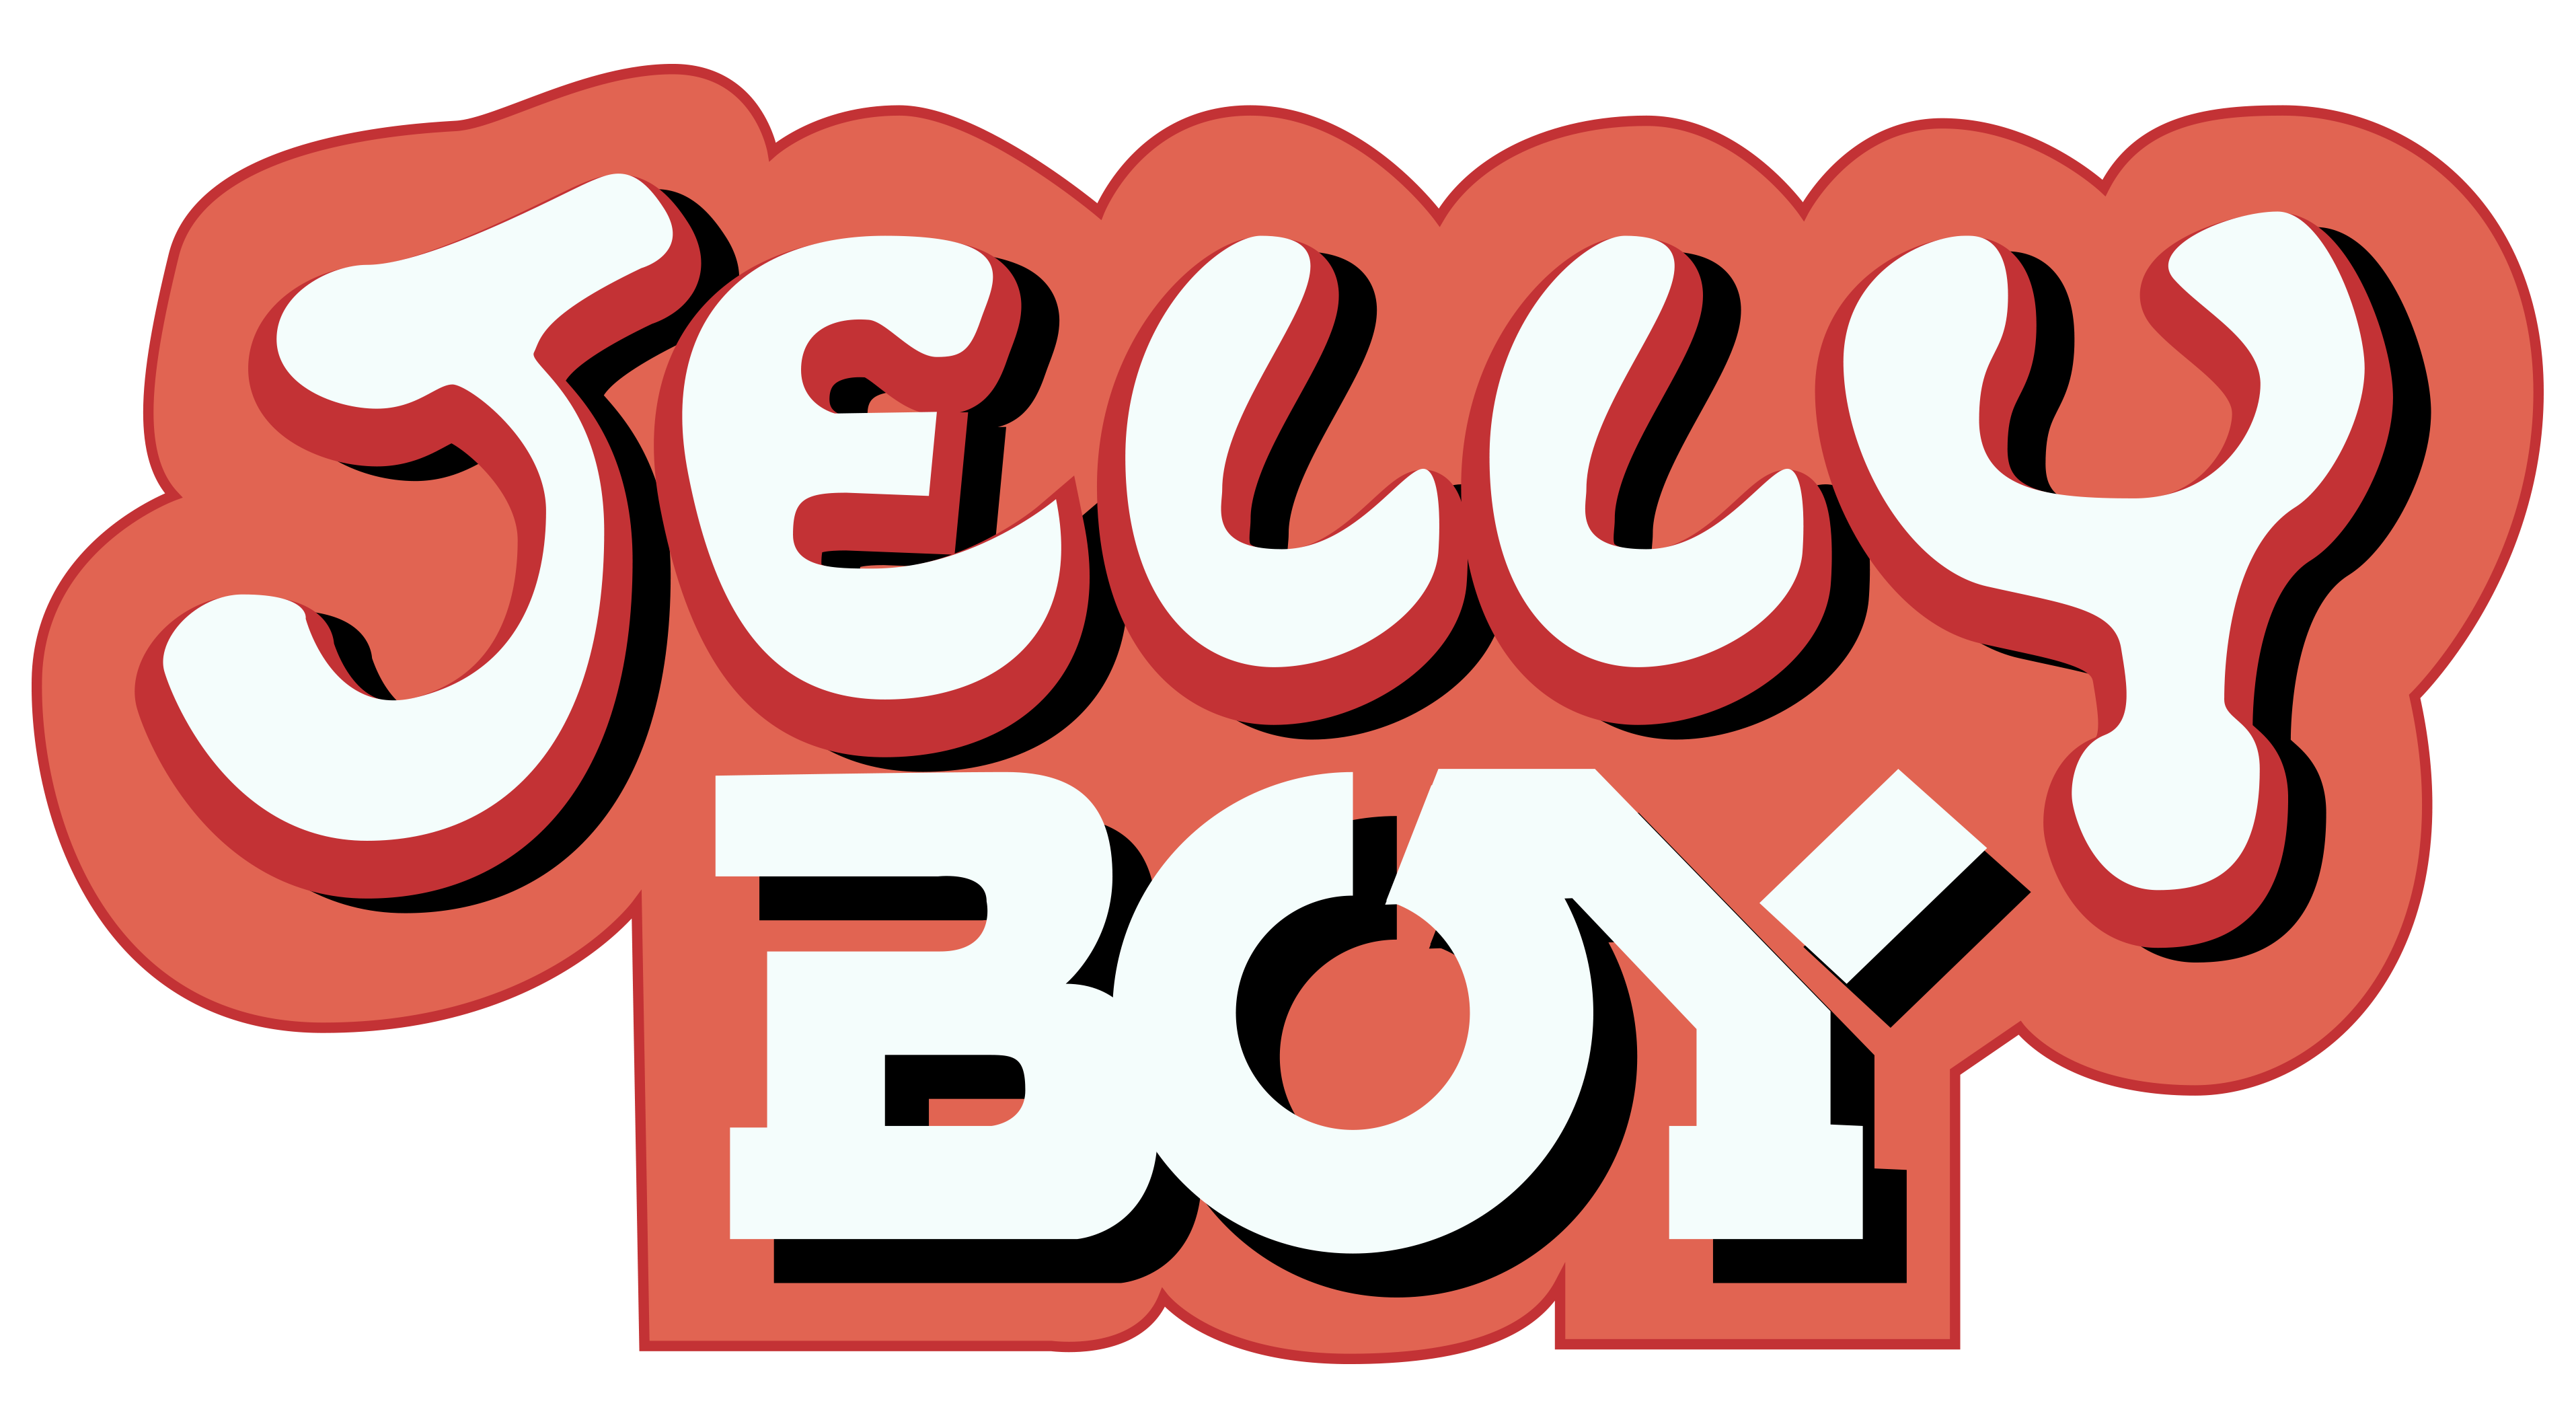 Jelly boy orion. Adobe Nintendo. Jelly boy Snes.